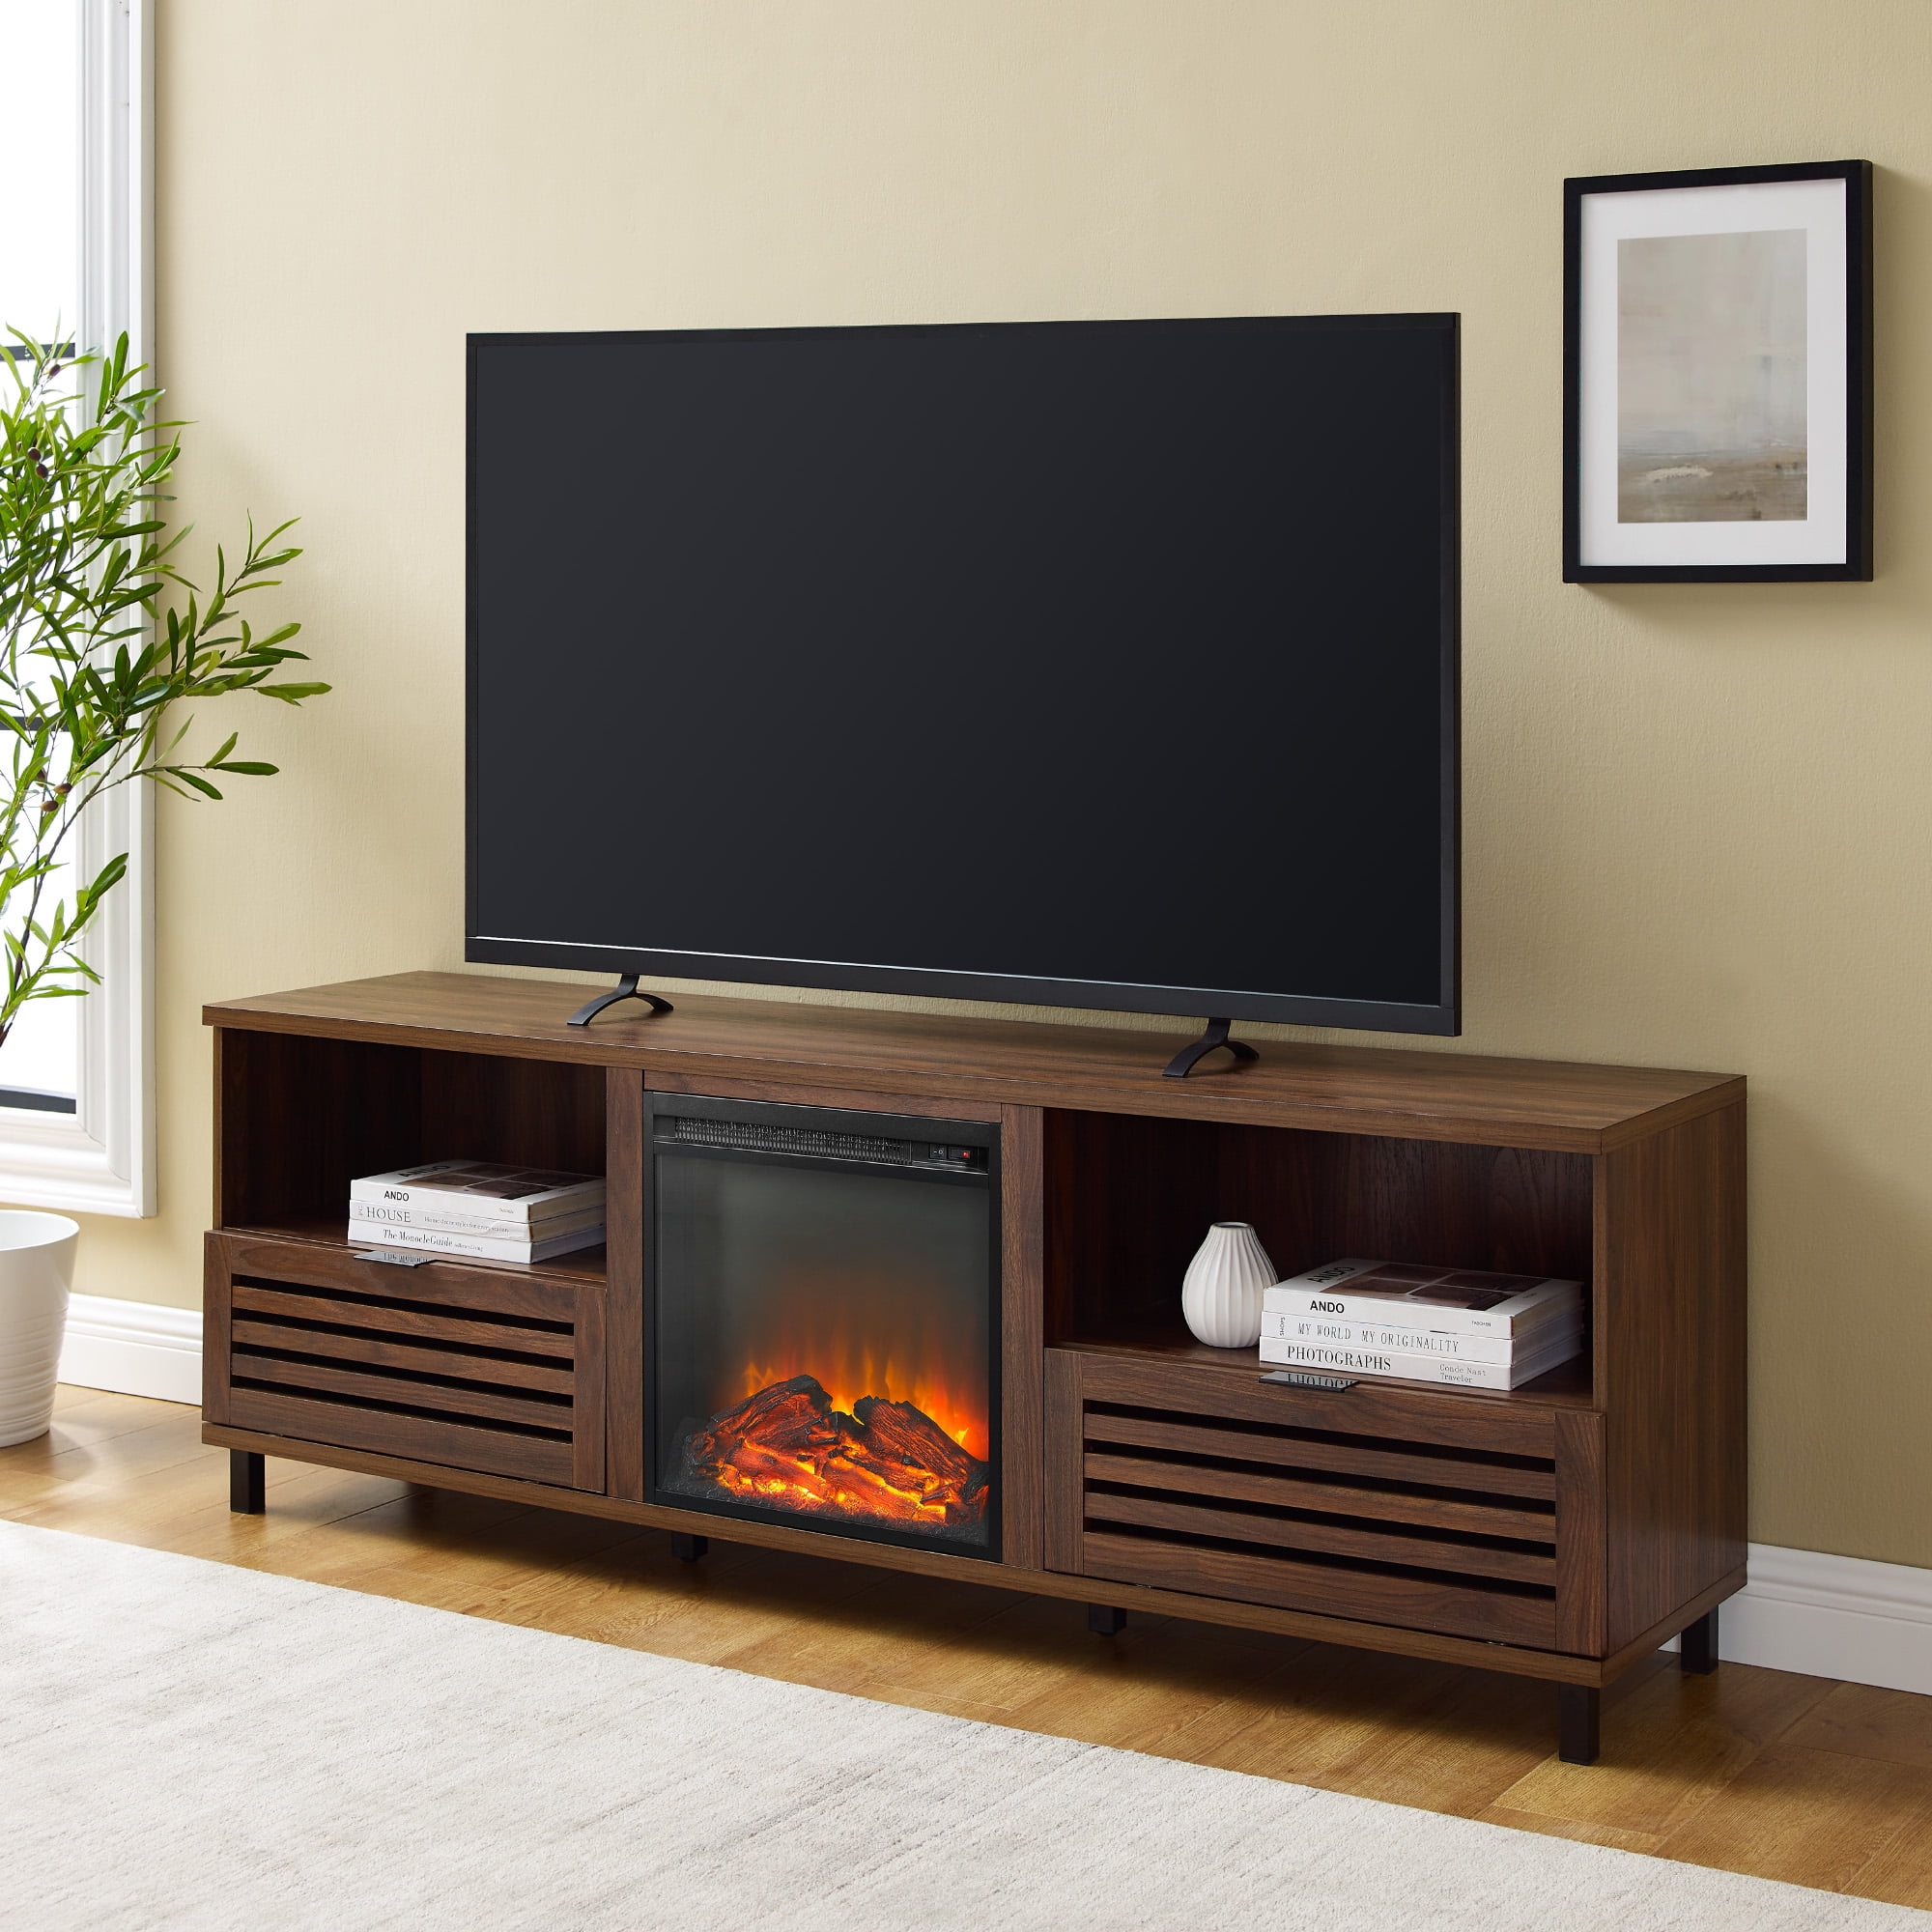 Manor Park Industrial Fireplace TV Stand for TVs up to 80", Dark Walnut - Walmart.com